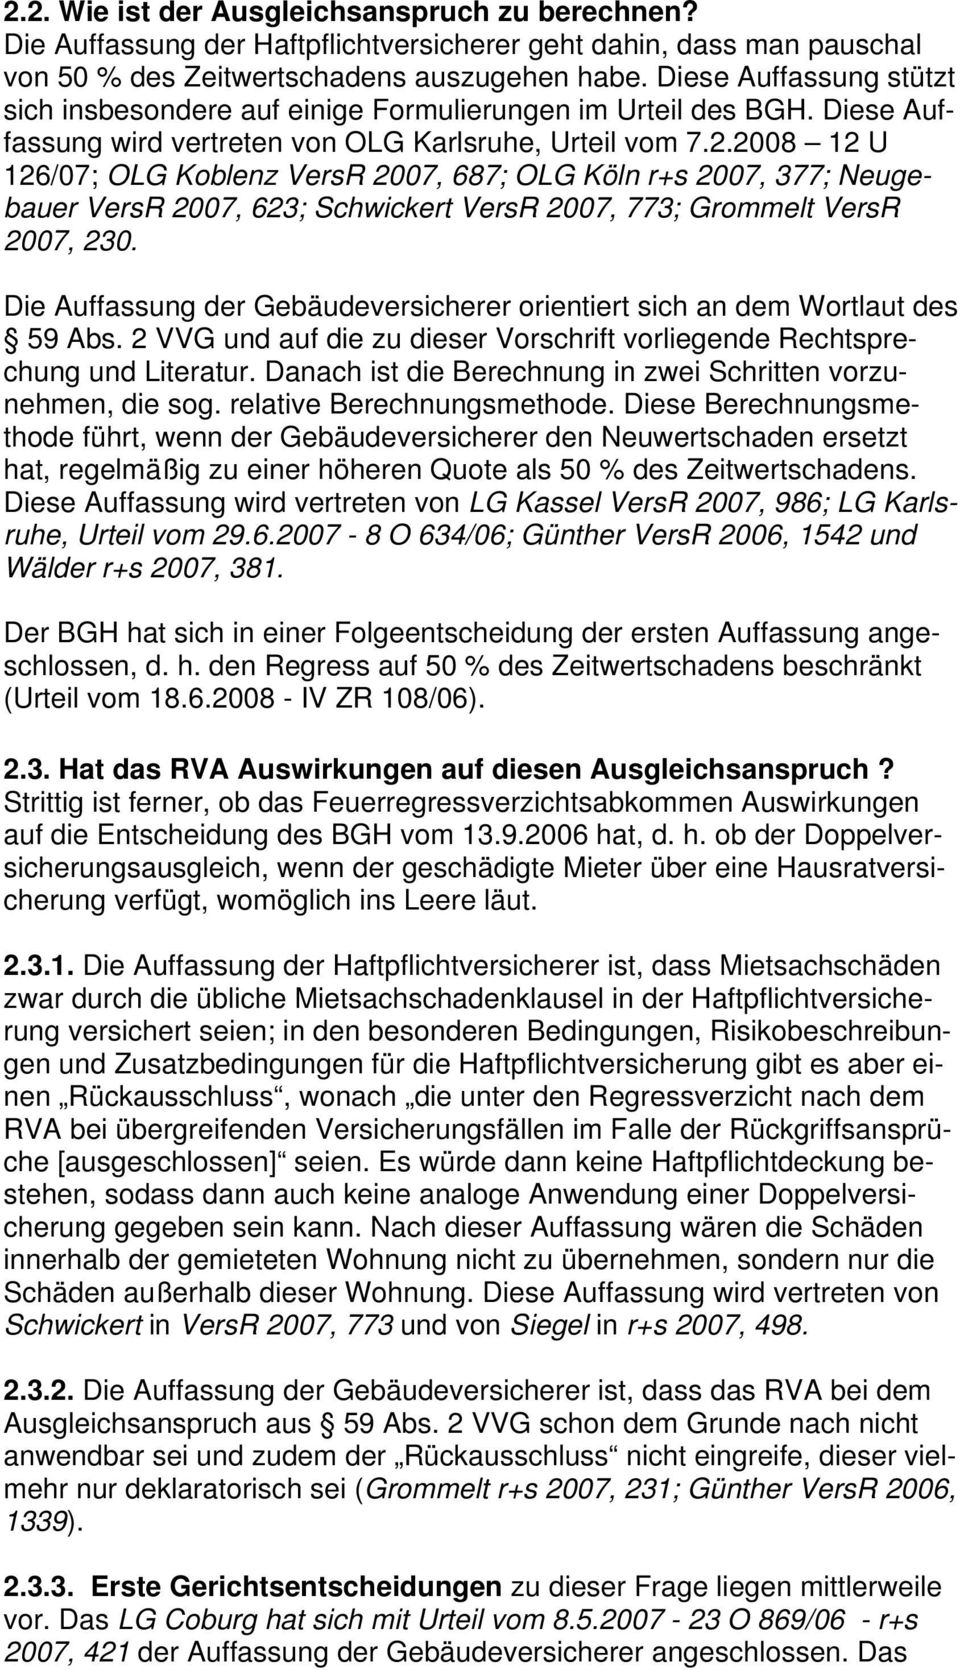 2008 12 U 126/07; OLG Koblenz VersR 2007, 687; OLG Köln r+s 2007, 377; Neugebauer VersR 2007, 623; Schwickert VersR 2007, 773; Grommelt VersR 2007, 230.